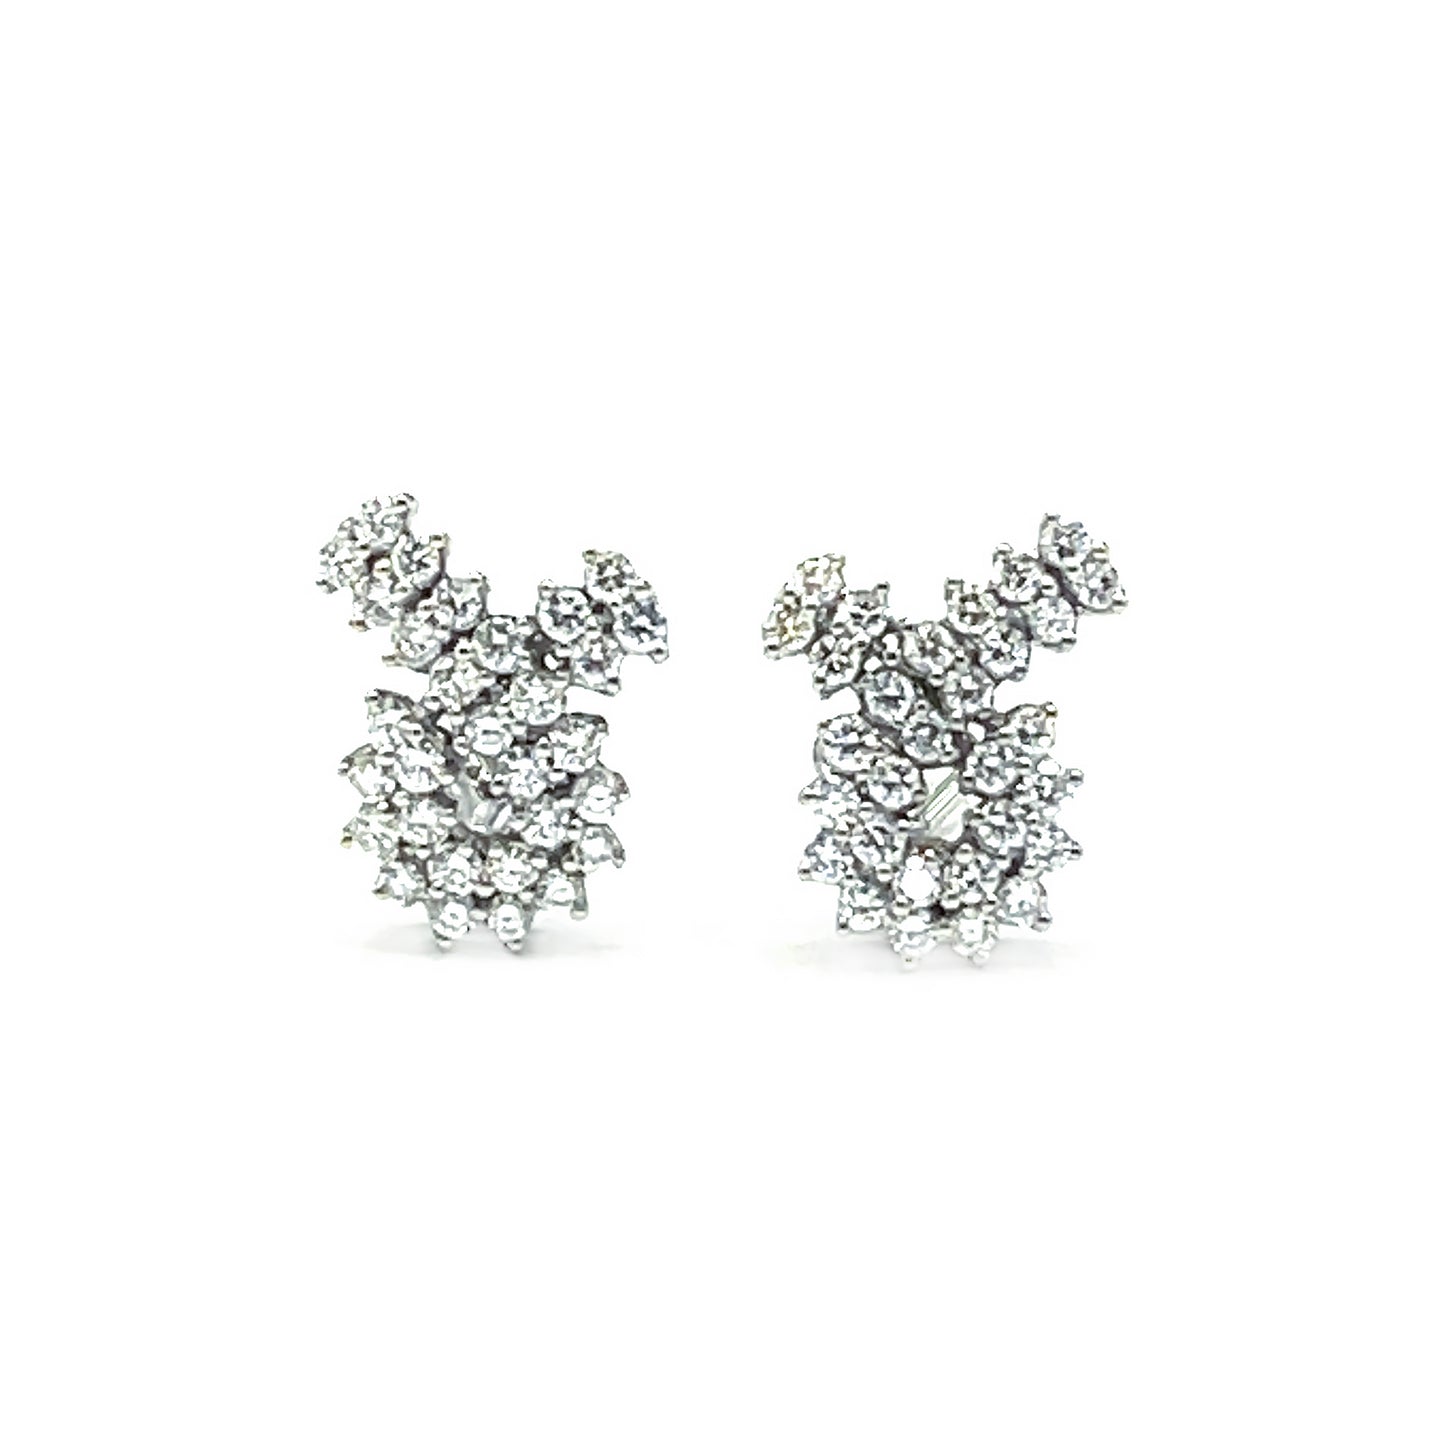 Ribbon Swirl Diamond Earrings